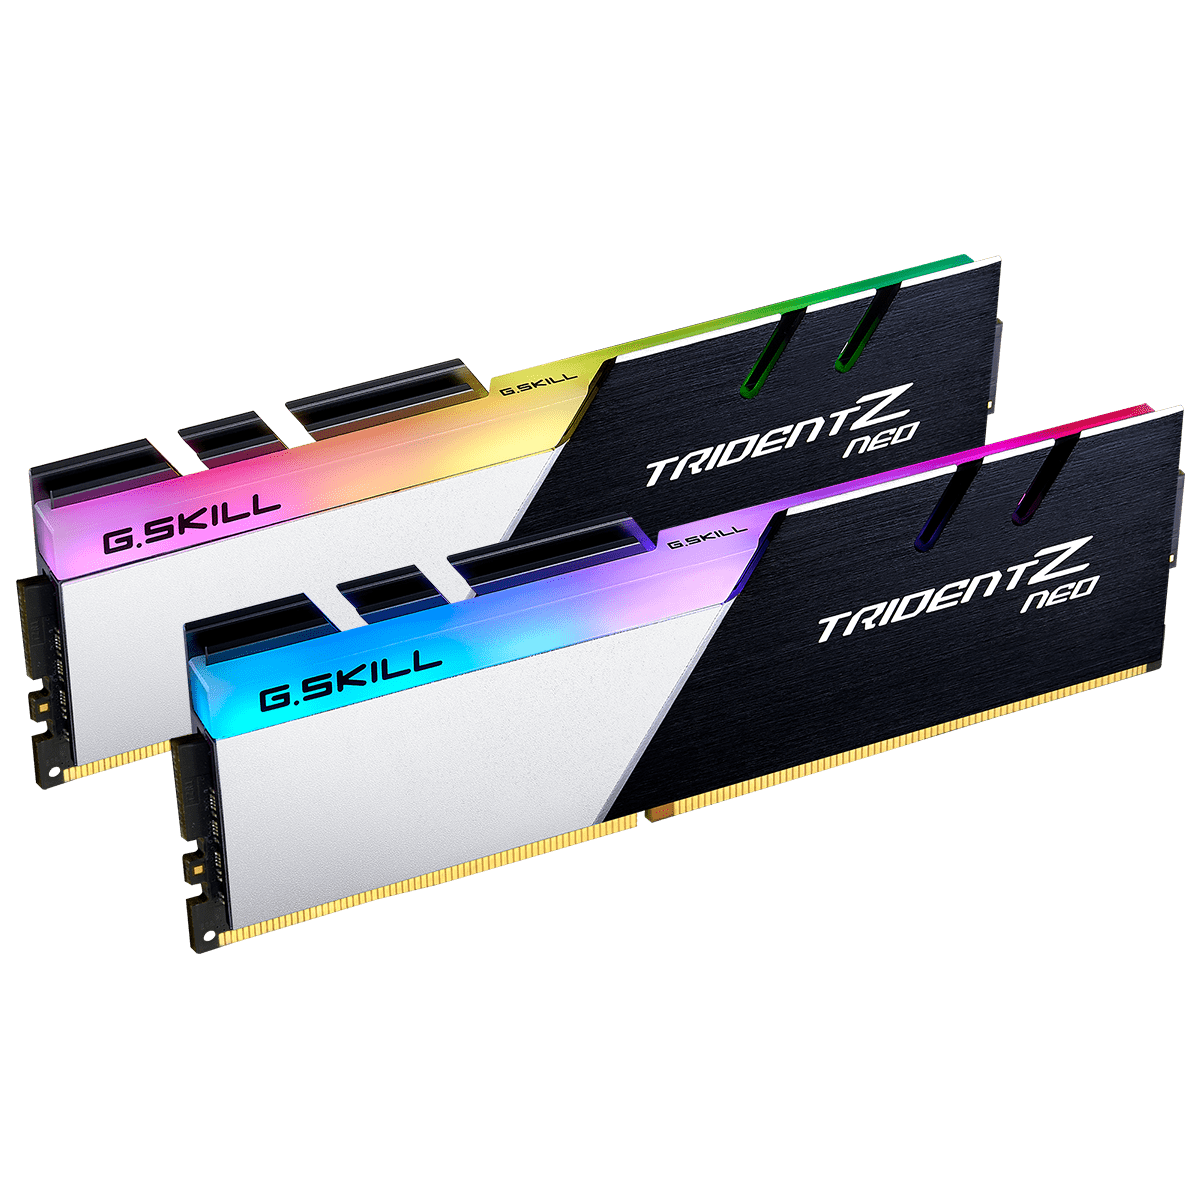 Памет G.SKILL Trident Z Neo RGB 16GB(2x8GB) DDR4 3600MHz CL16 F4-3600C16D-16GTZNC-2